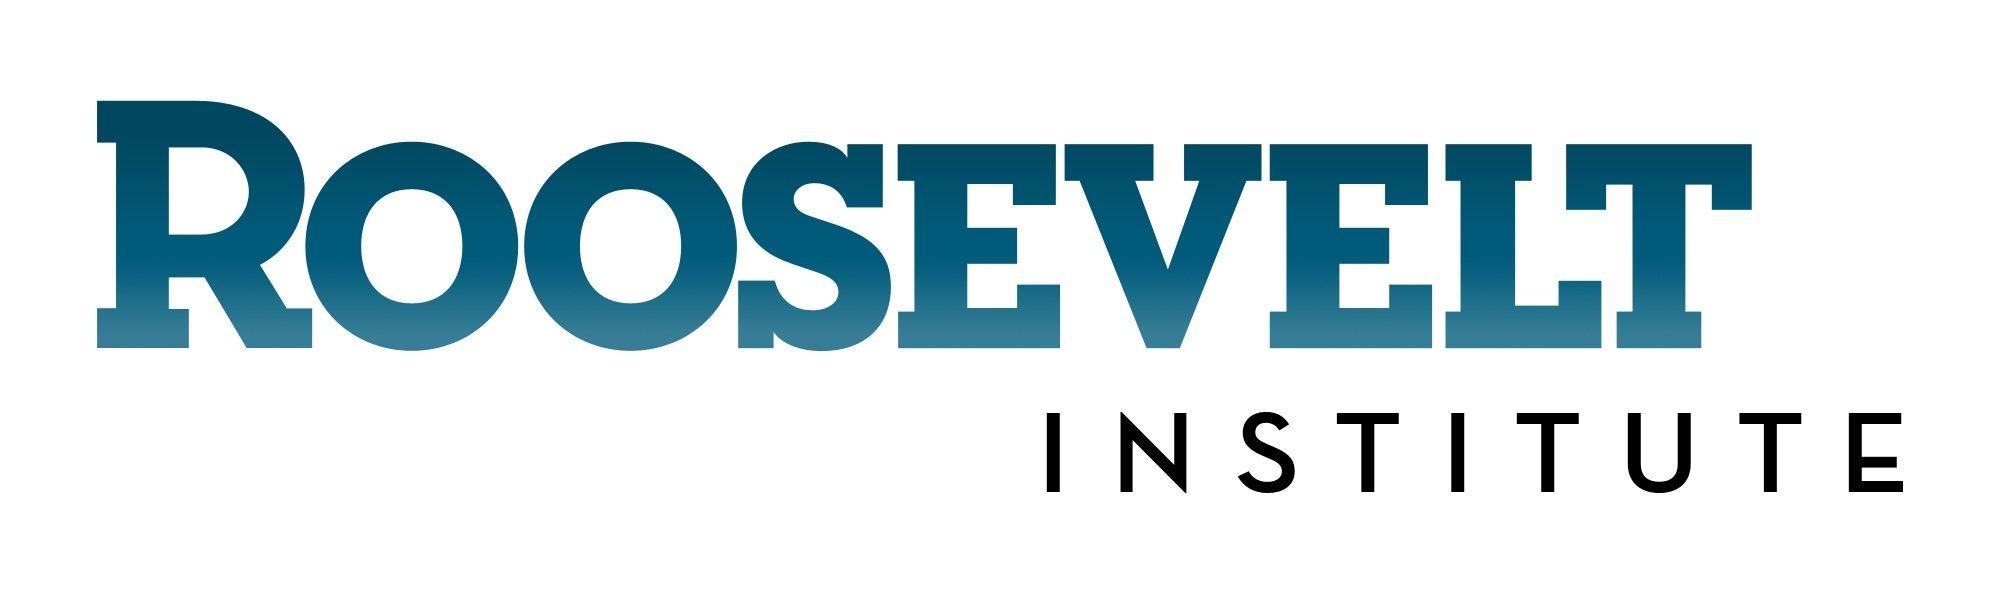 Roosevelt Logo - File:Roosevelt Institute Logo.jpg